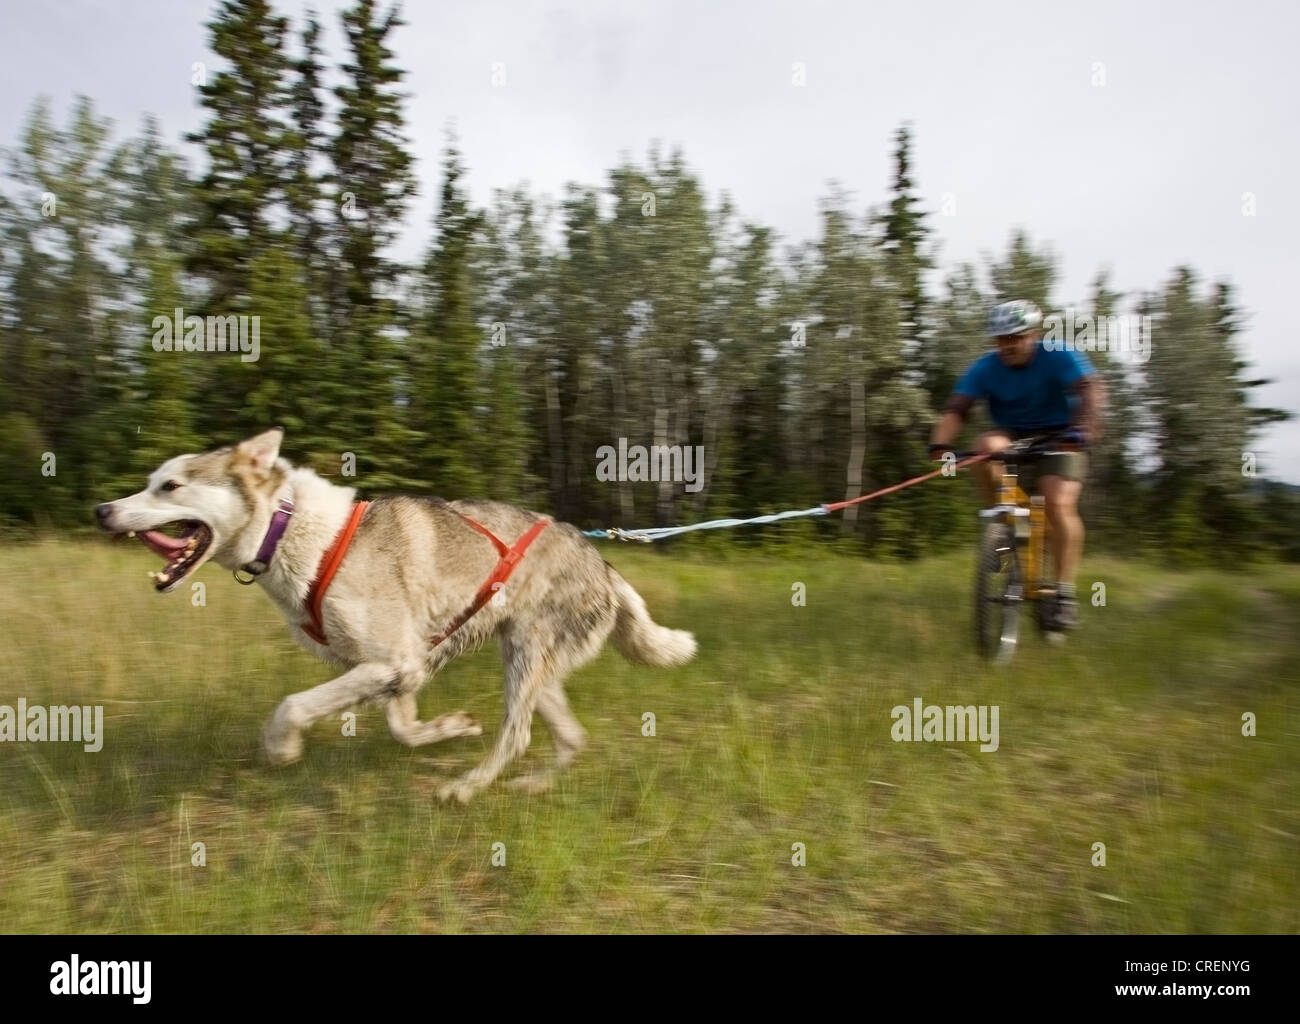 Alaskan Husky, pulling a mountain bike, man bikejoring, bikejoering, dog sport, dry land sled dog race, Yukon Territory, Canada Stock Photo